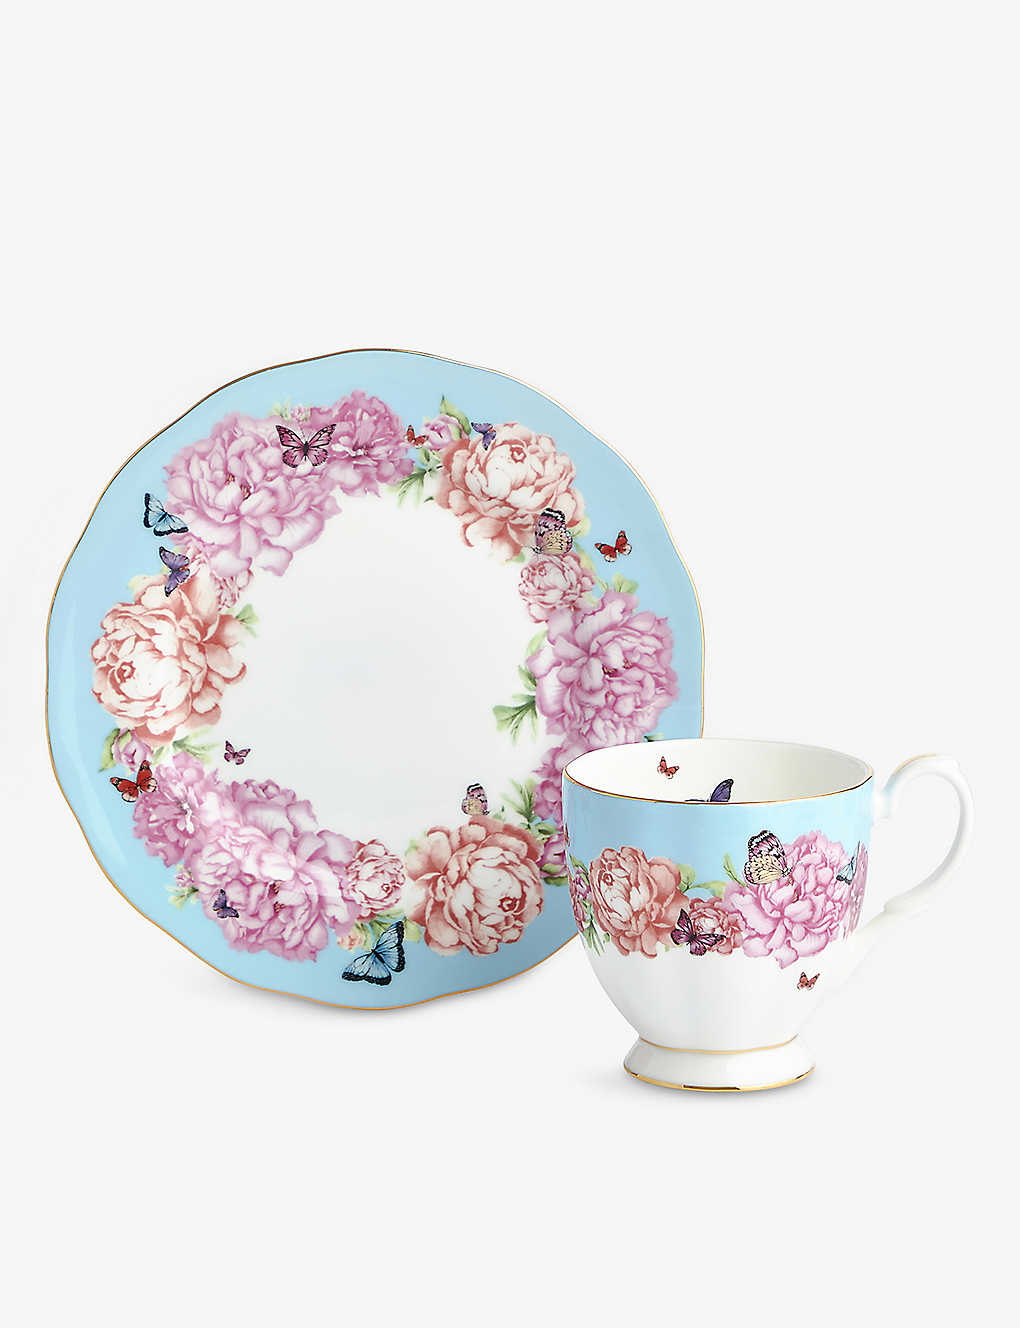 Royal Albert Miranda Kerr Friendship Devotion Porcelain Plate And Mug Set